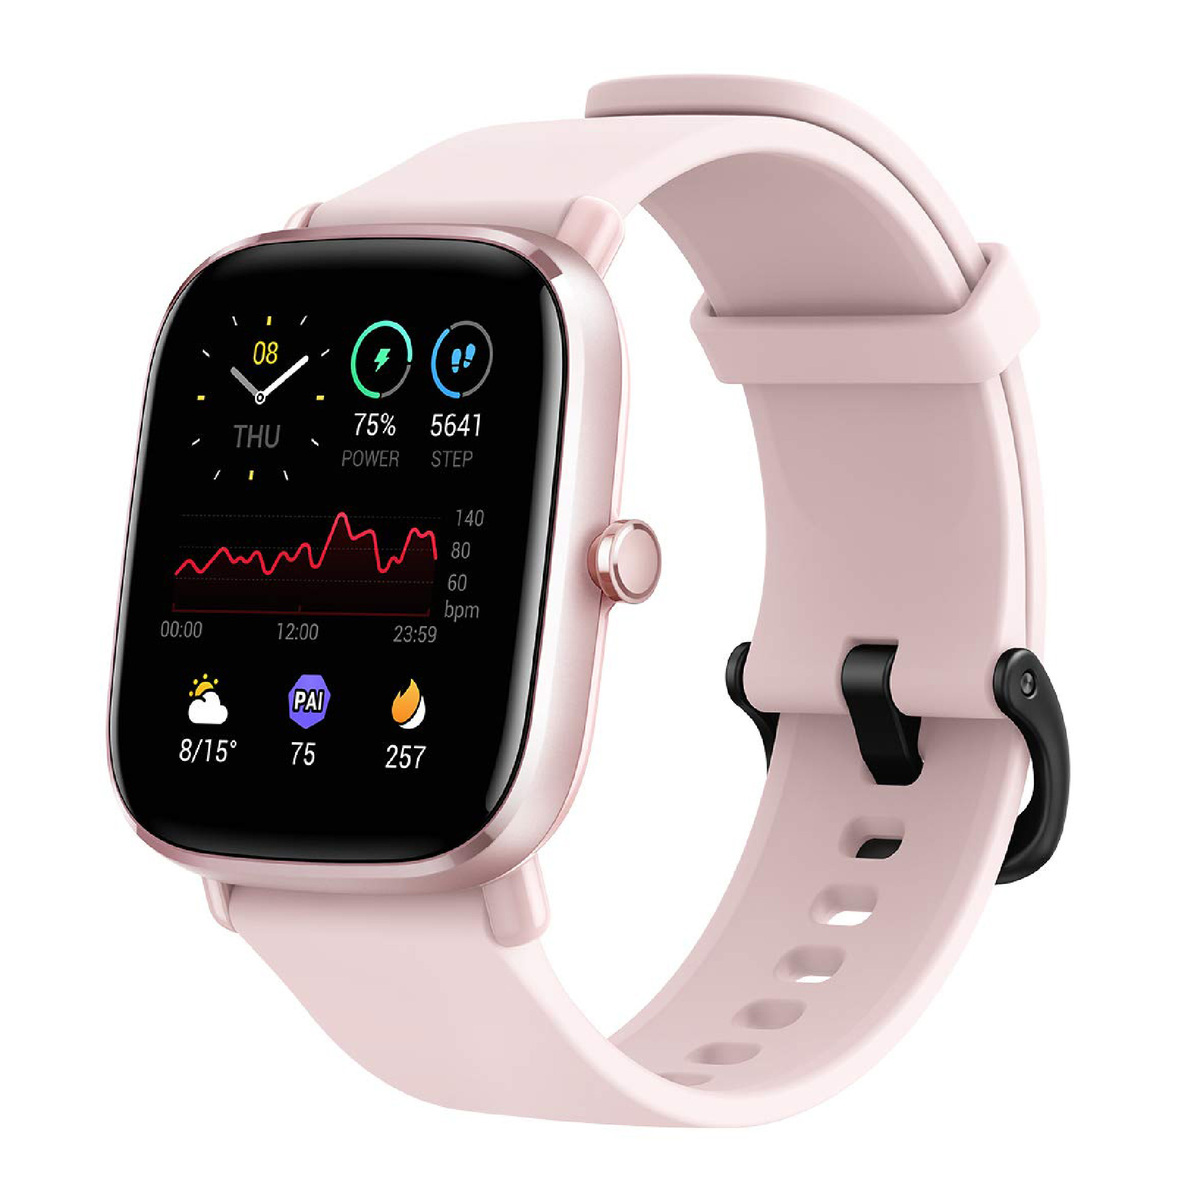 Amazfit GTS 2 Mini Fitness Smart Watch, Super-Light Thin Design, SpO2 Level Measurement, 14-Days Battery Life, 70+ Sports Modes, Heart Rate, Sleep, Stress Level Monitoring, Flamingo Pink